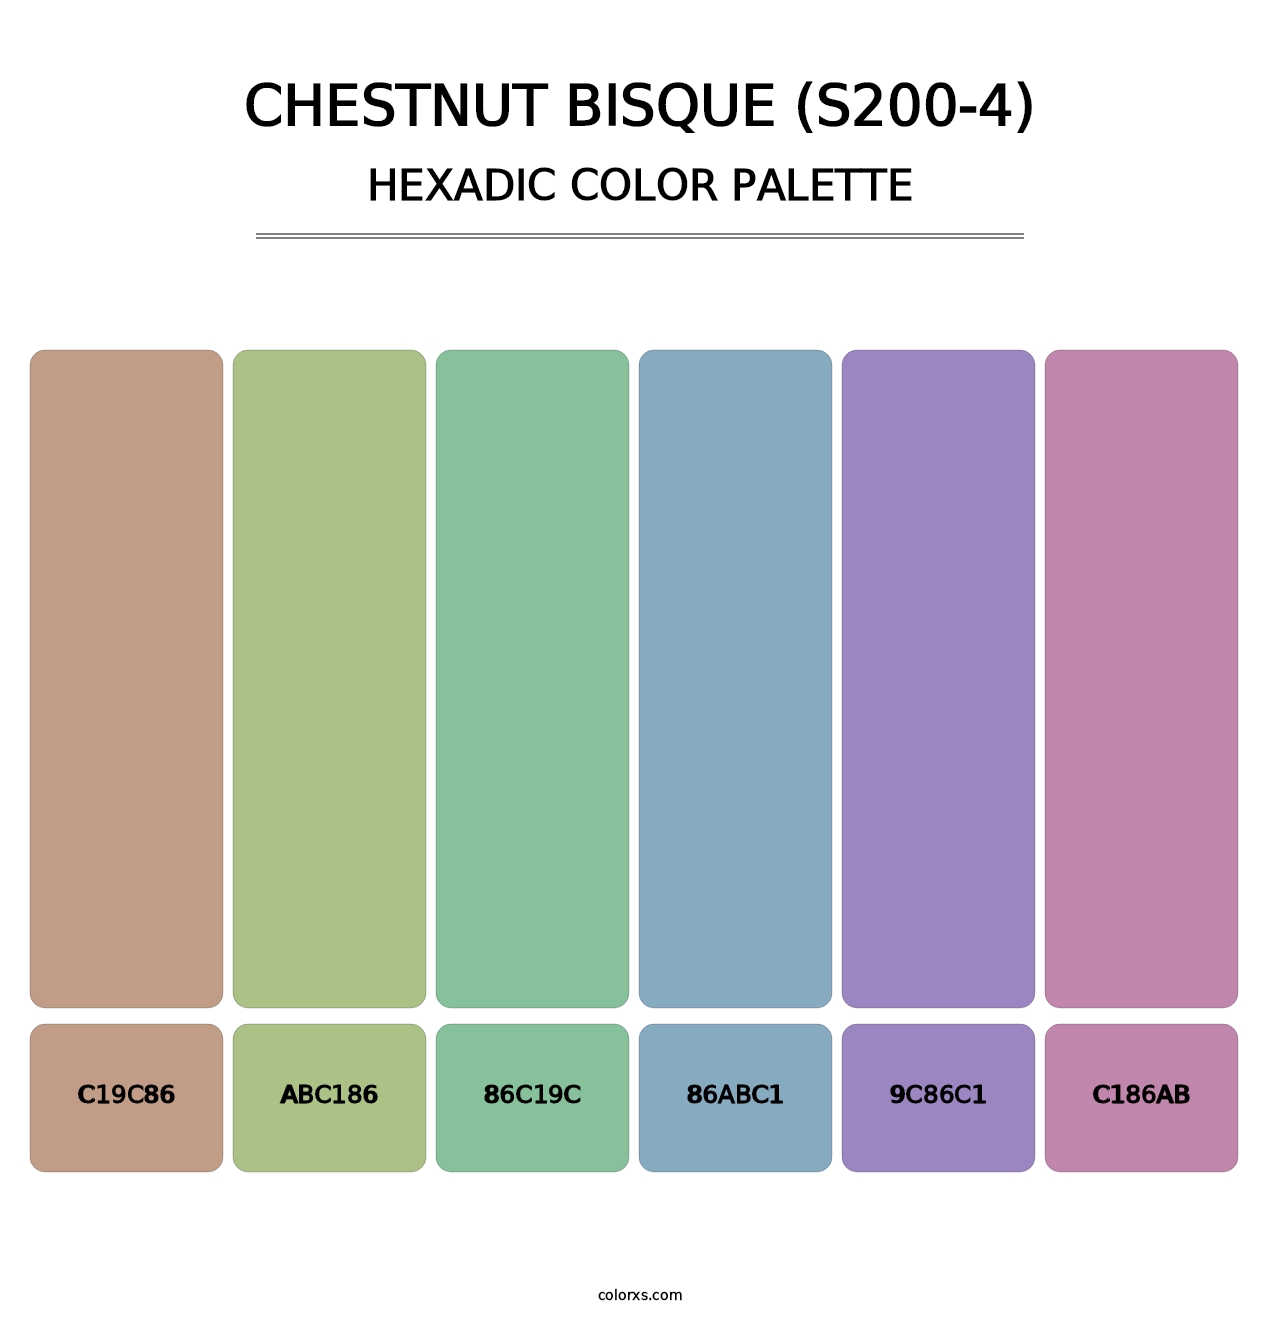 Chestnut Bisque (S200-4) - Hexadic Color Palette